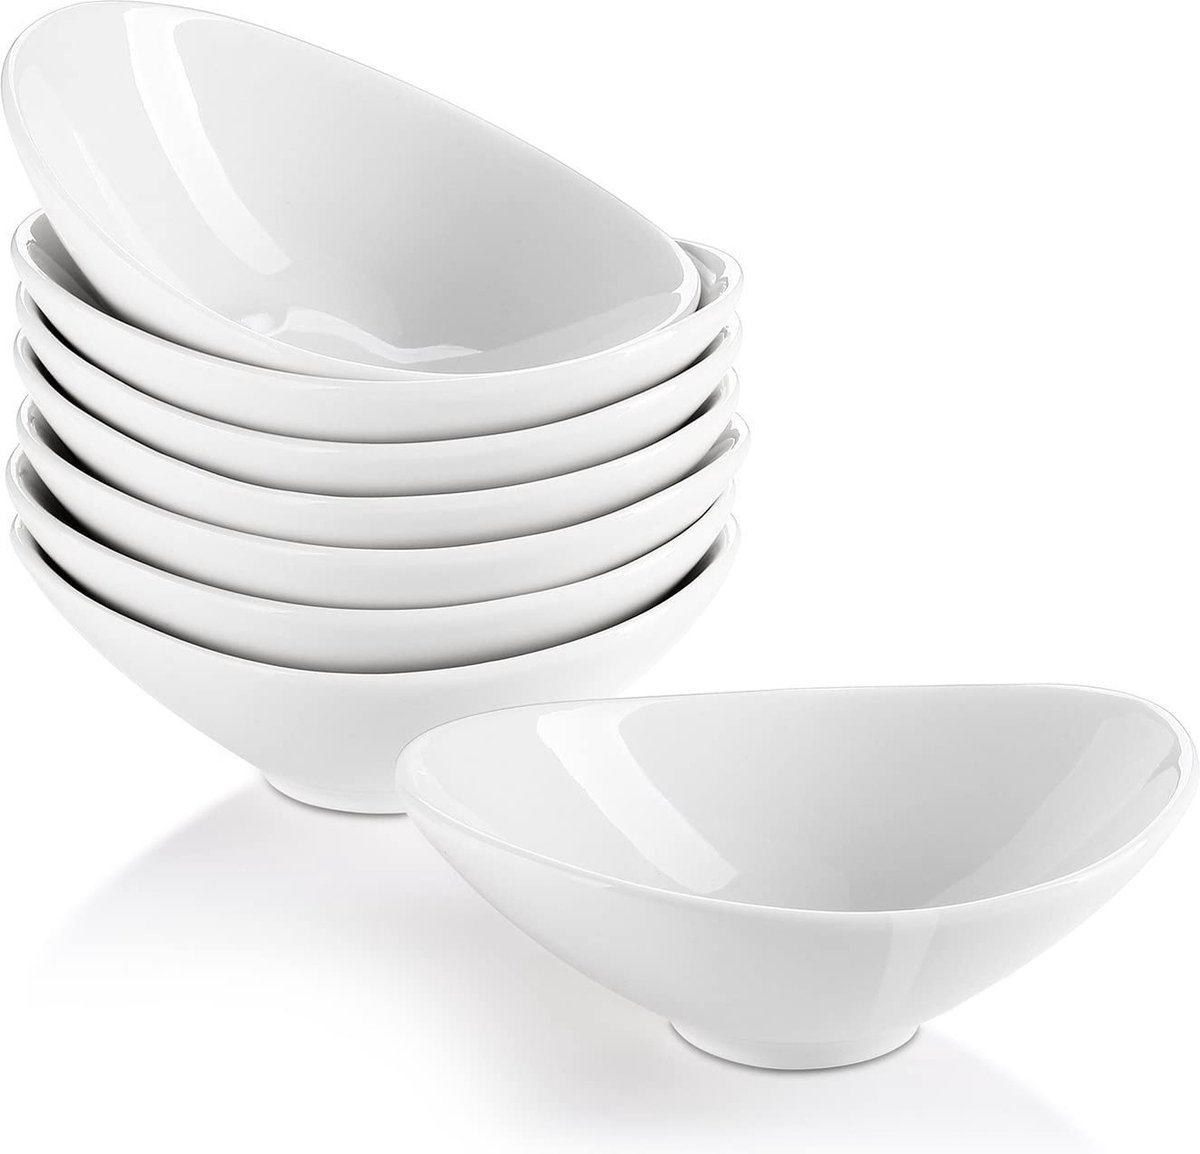 LIFVER Dip Bowls Set van 8, 3 oz Dipping Bowls, Porseleinen Serveerschalen, Sojasaus Gerechten voor BBQ, Salade, Tomatensaus en Feestdiner, Wit